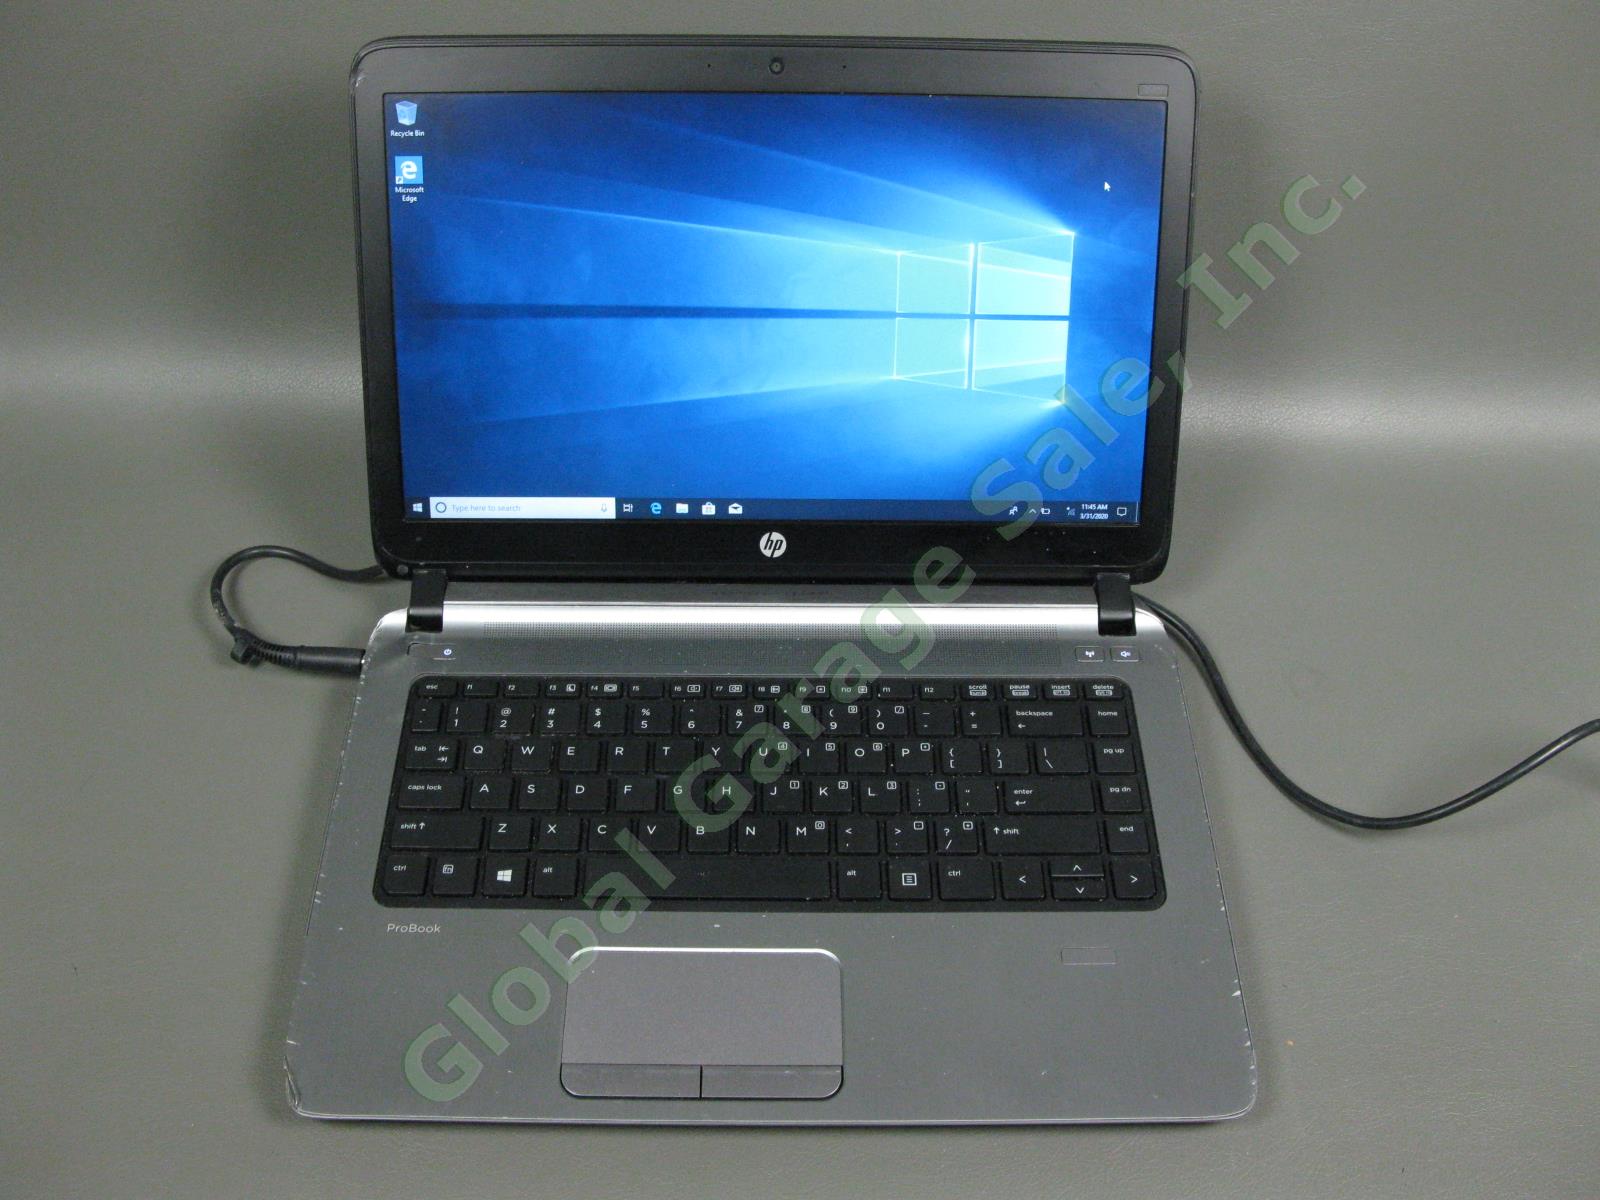 HP ProBook Black Laptop 440 G2 i5-5200U 2.20GHz 4GB RAM 460GB HD Windows 10 Pro